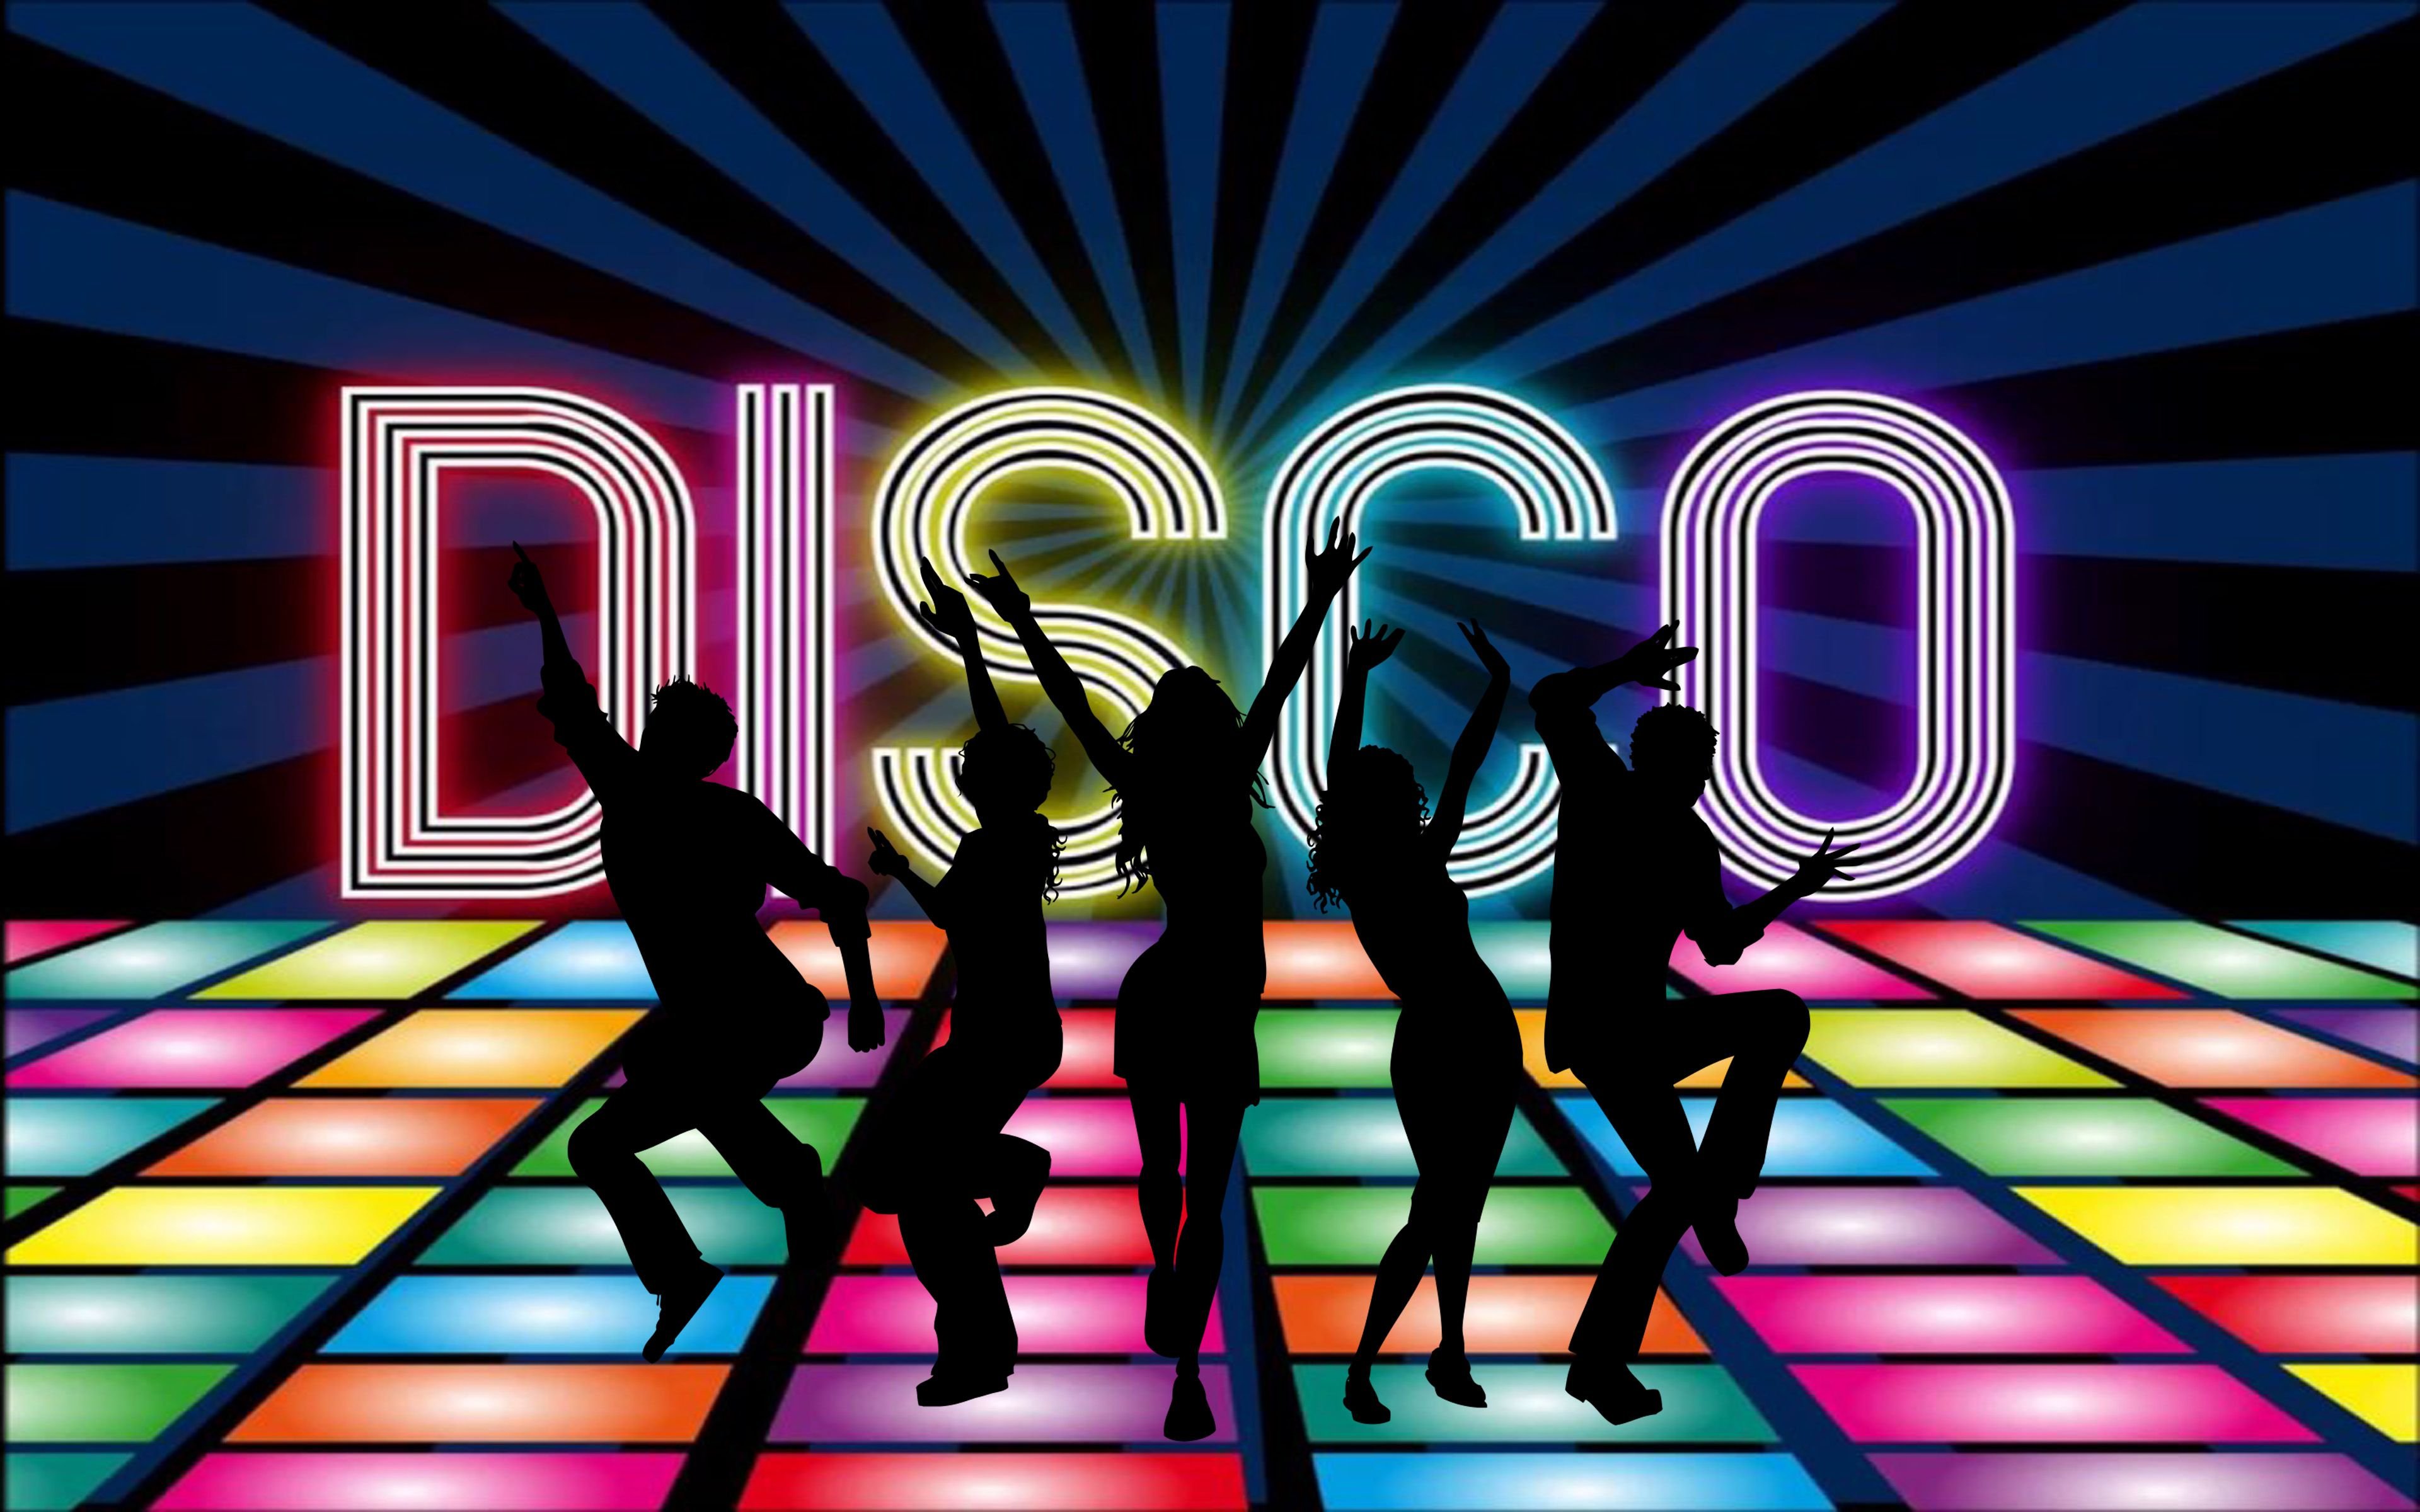 Disco disco party party remix. Диско. Диско танцы. Фон в стиле диско. Дискотека заставка.